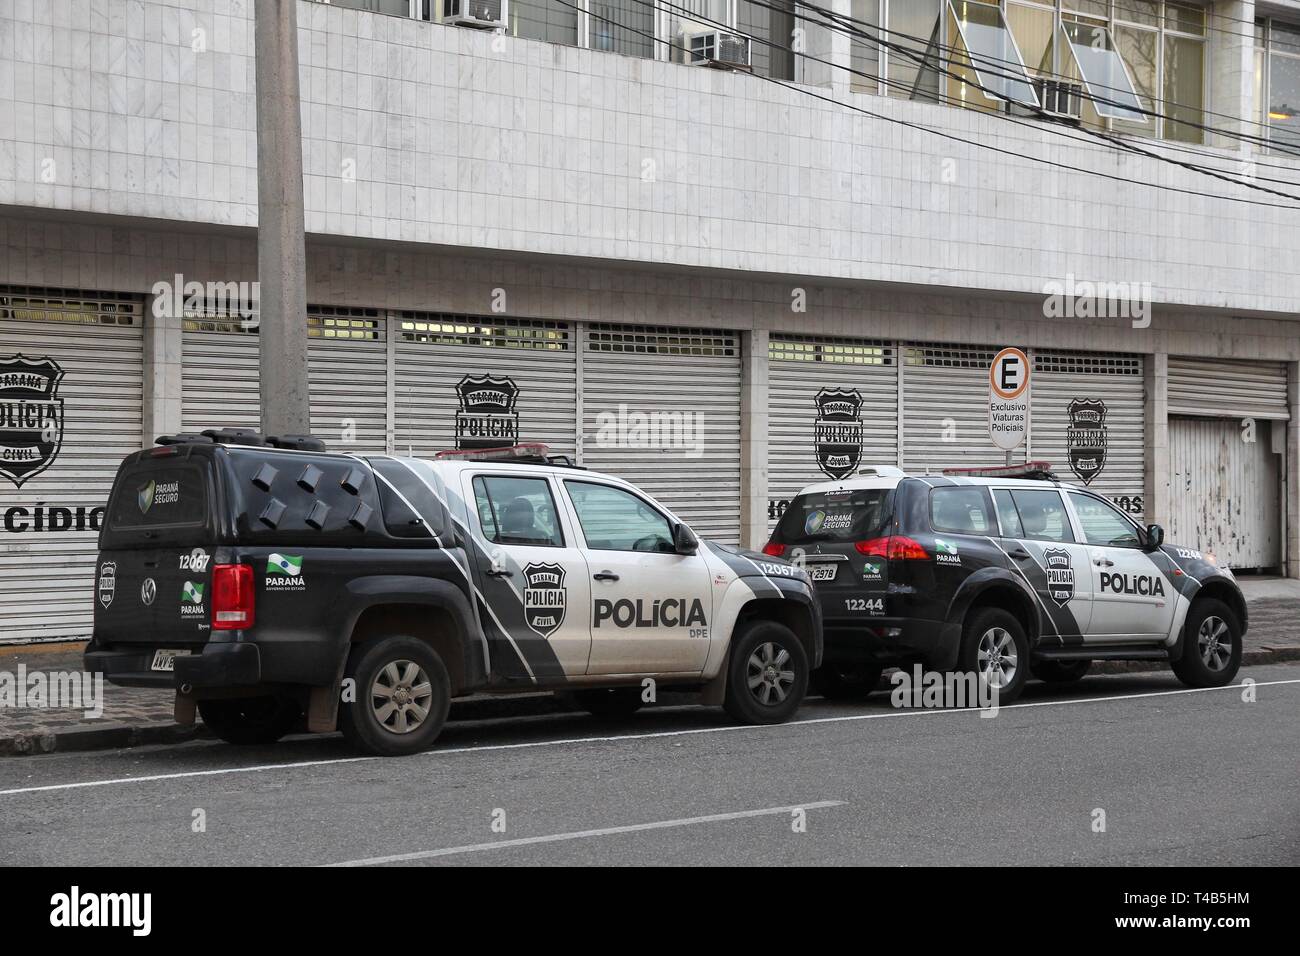 CURITIBA, BRAZIL - OCTOBER 8, 2014: Police cars of Parana region in Curitiba. Brazil has 424,000 police officers. Stock Photo